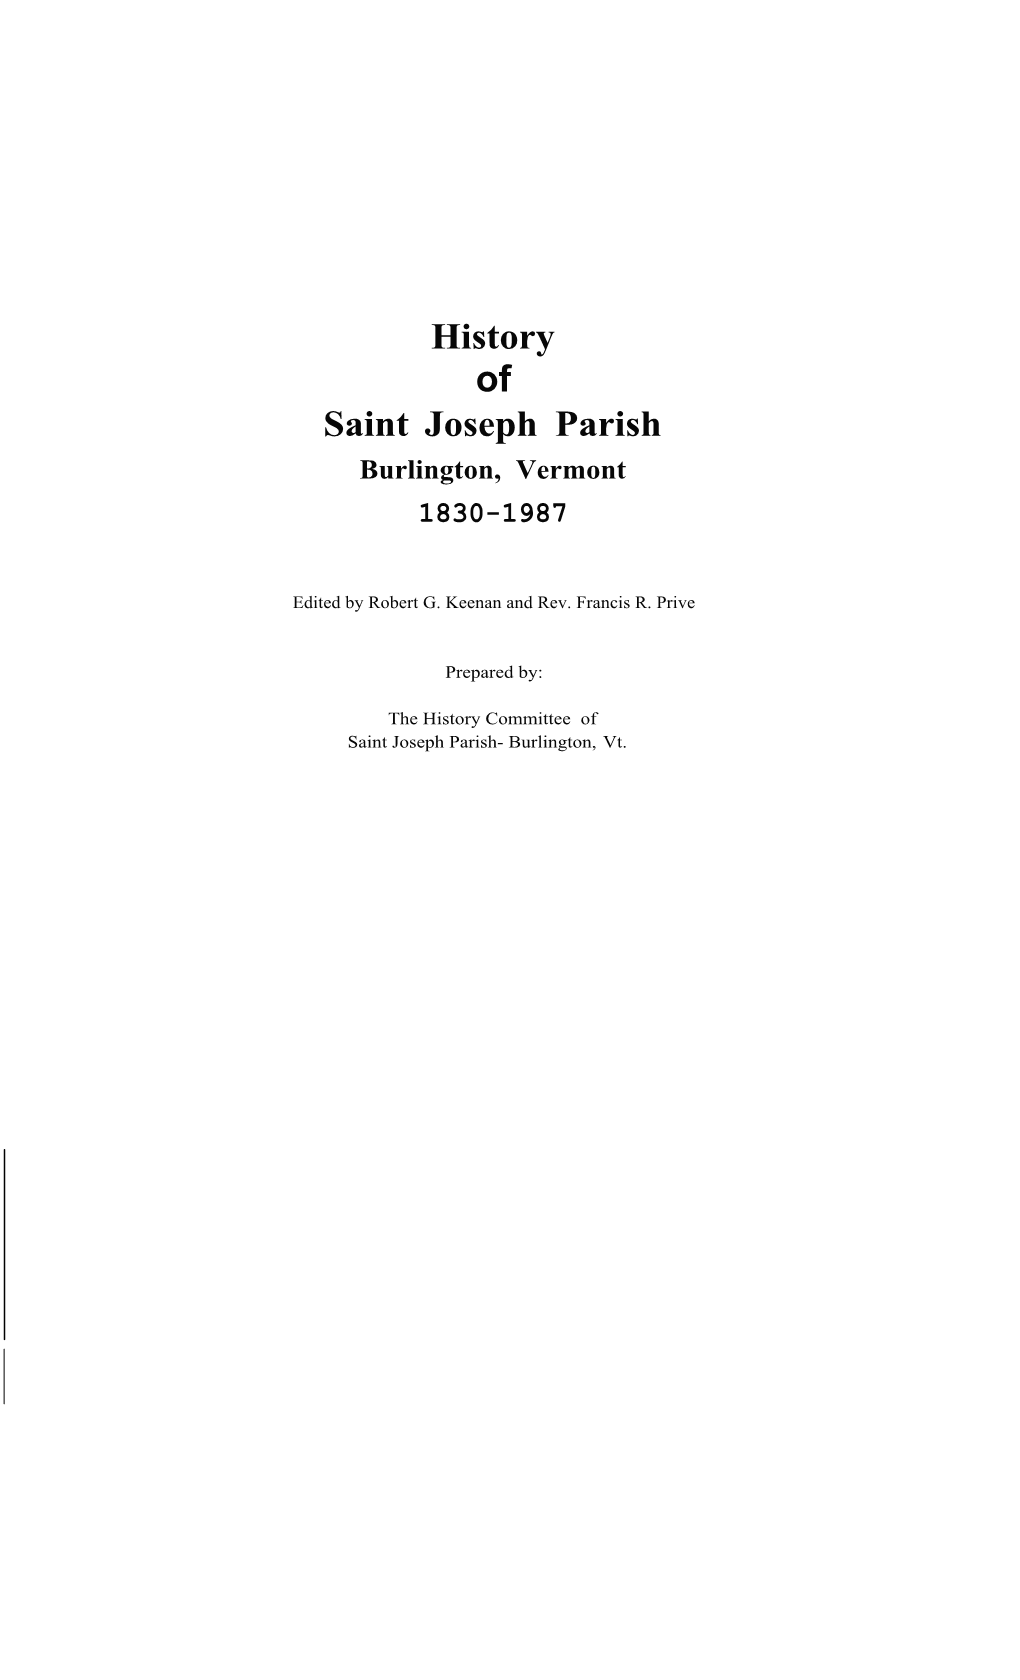 History of Saint Joseph Parish Burlington, Vermont 1830-1987